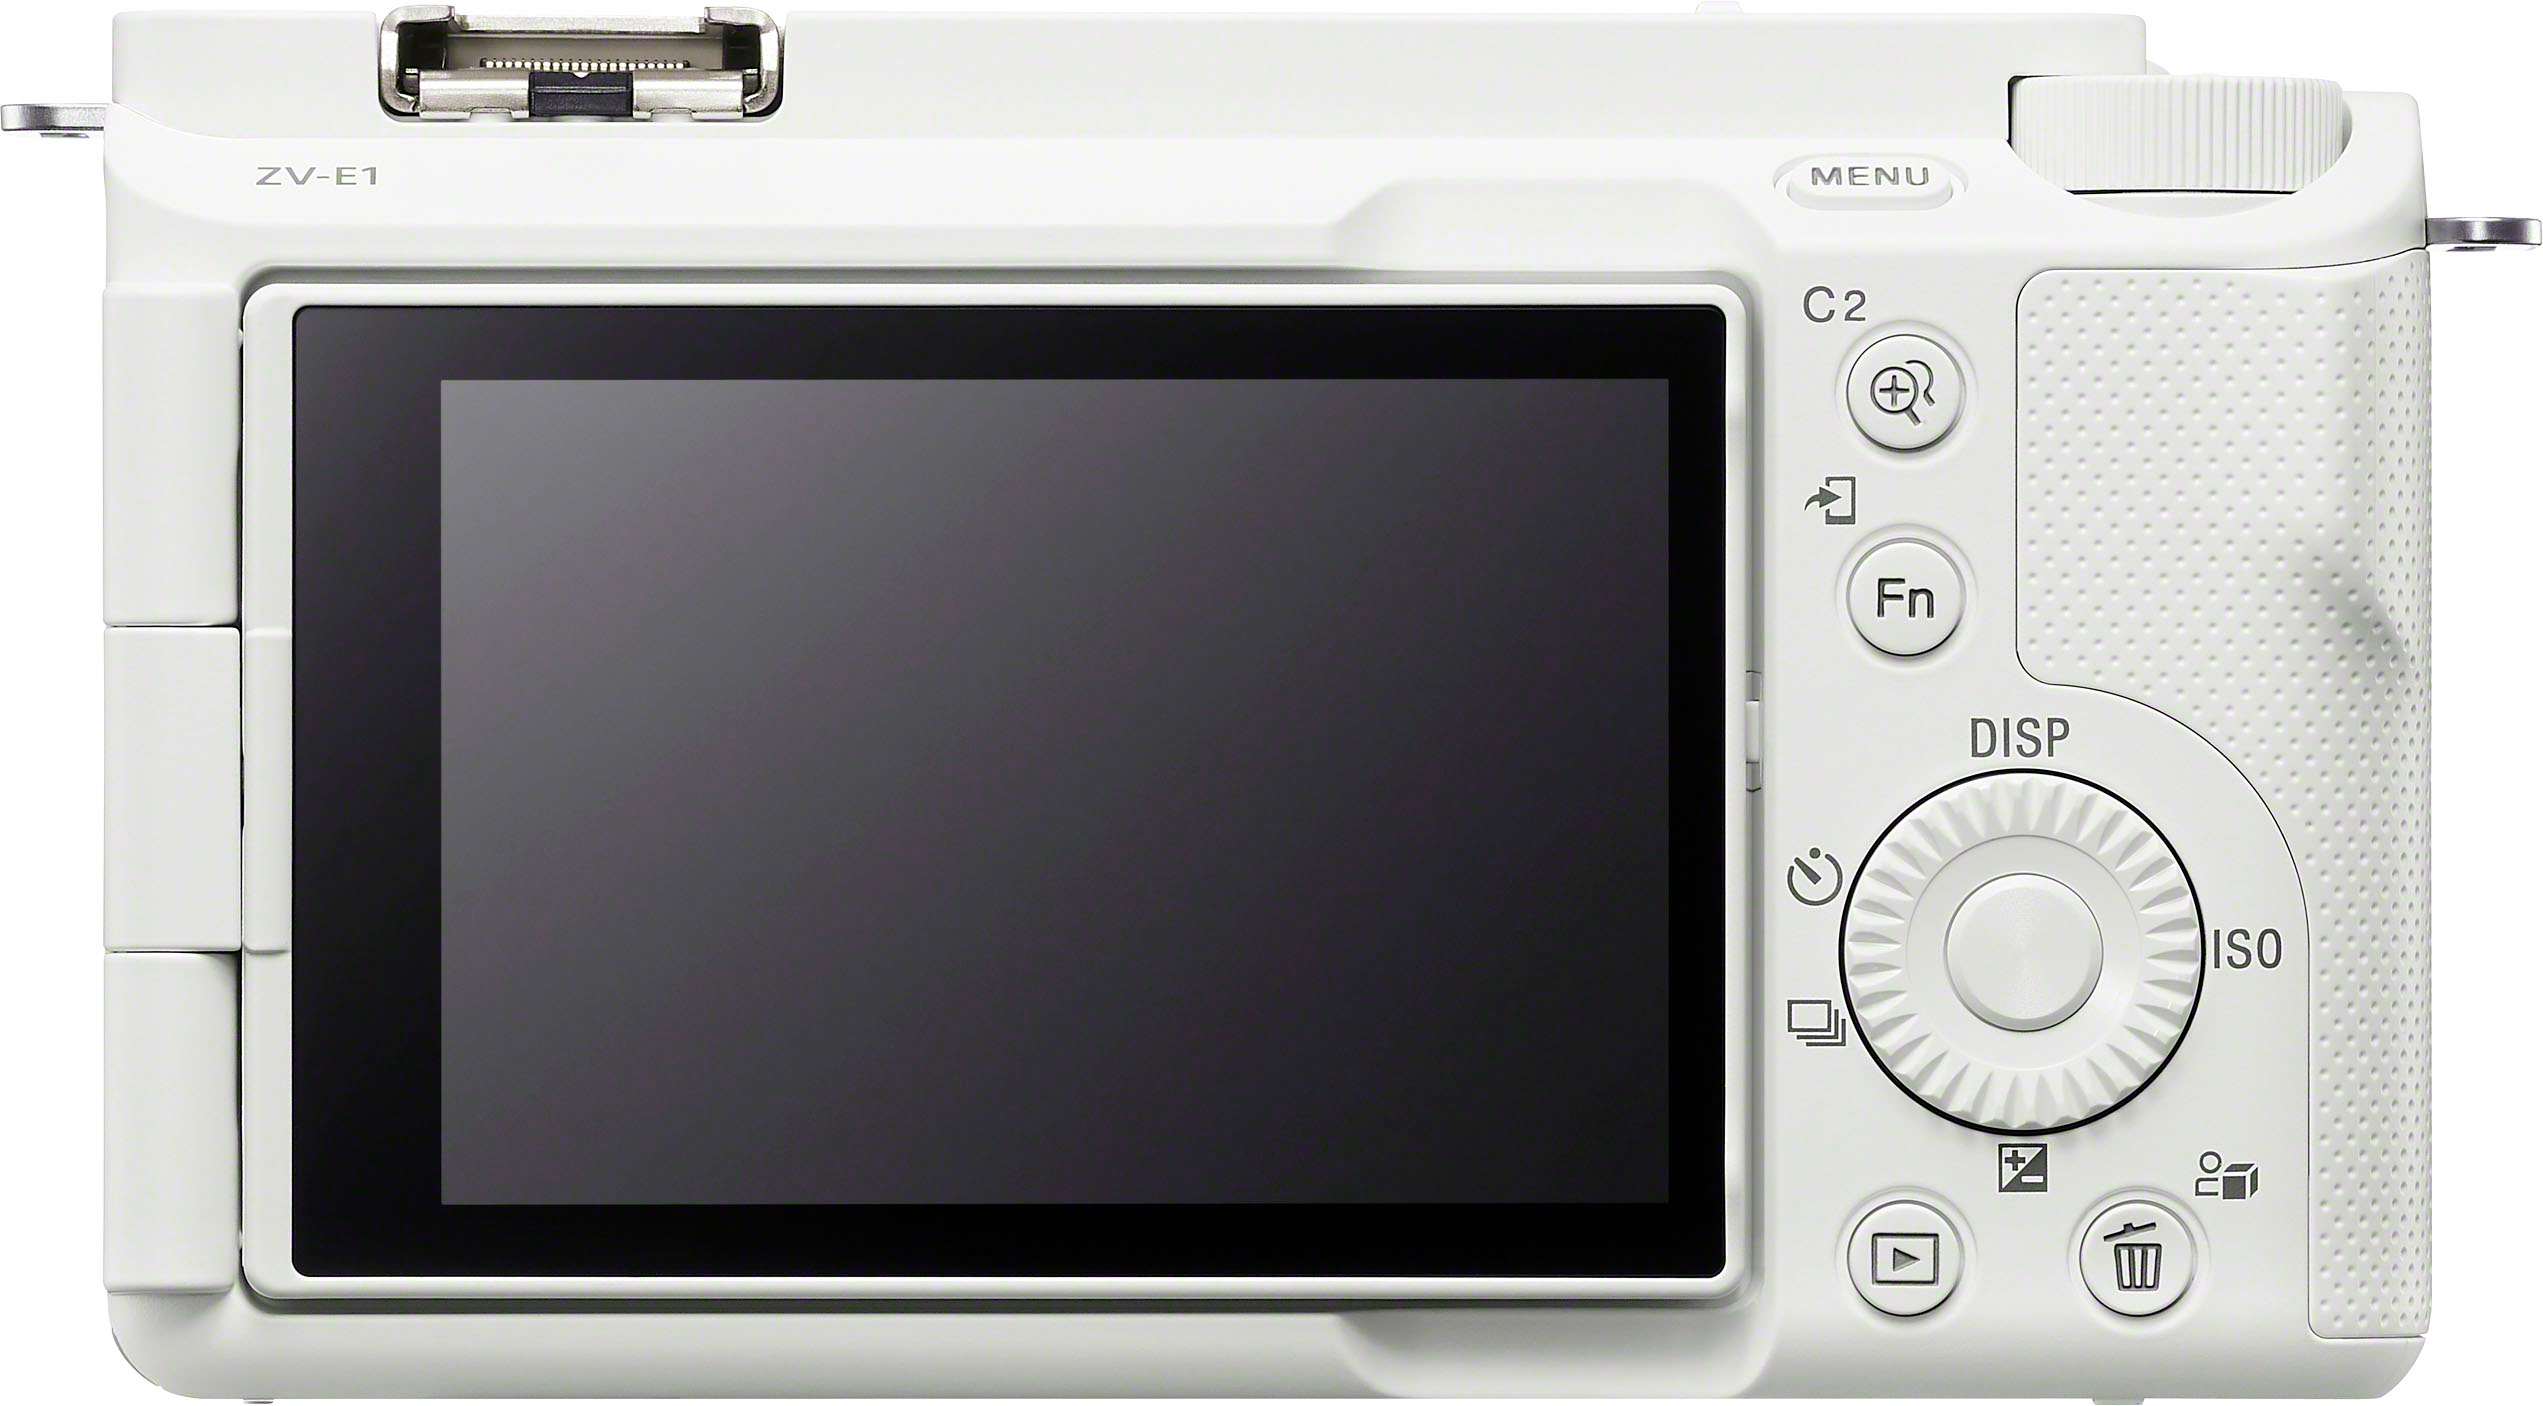 Sony Alpha ZV-E10 Kit Mirrorless Vlog Camera with 16-50mm Lens Black  ILCZVE10L/B - Best Buy